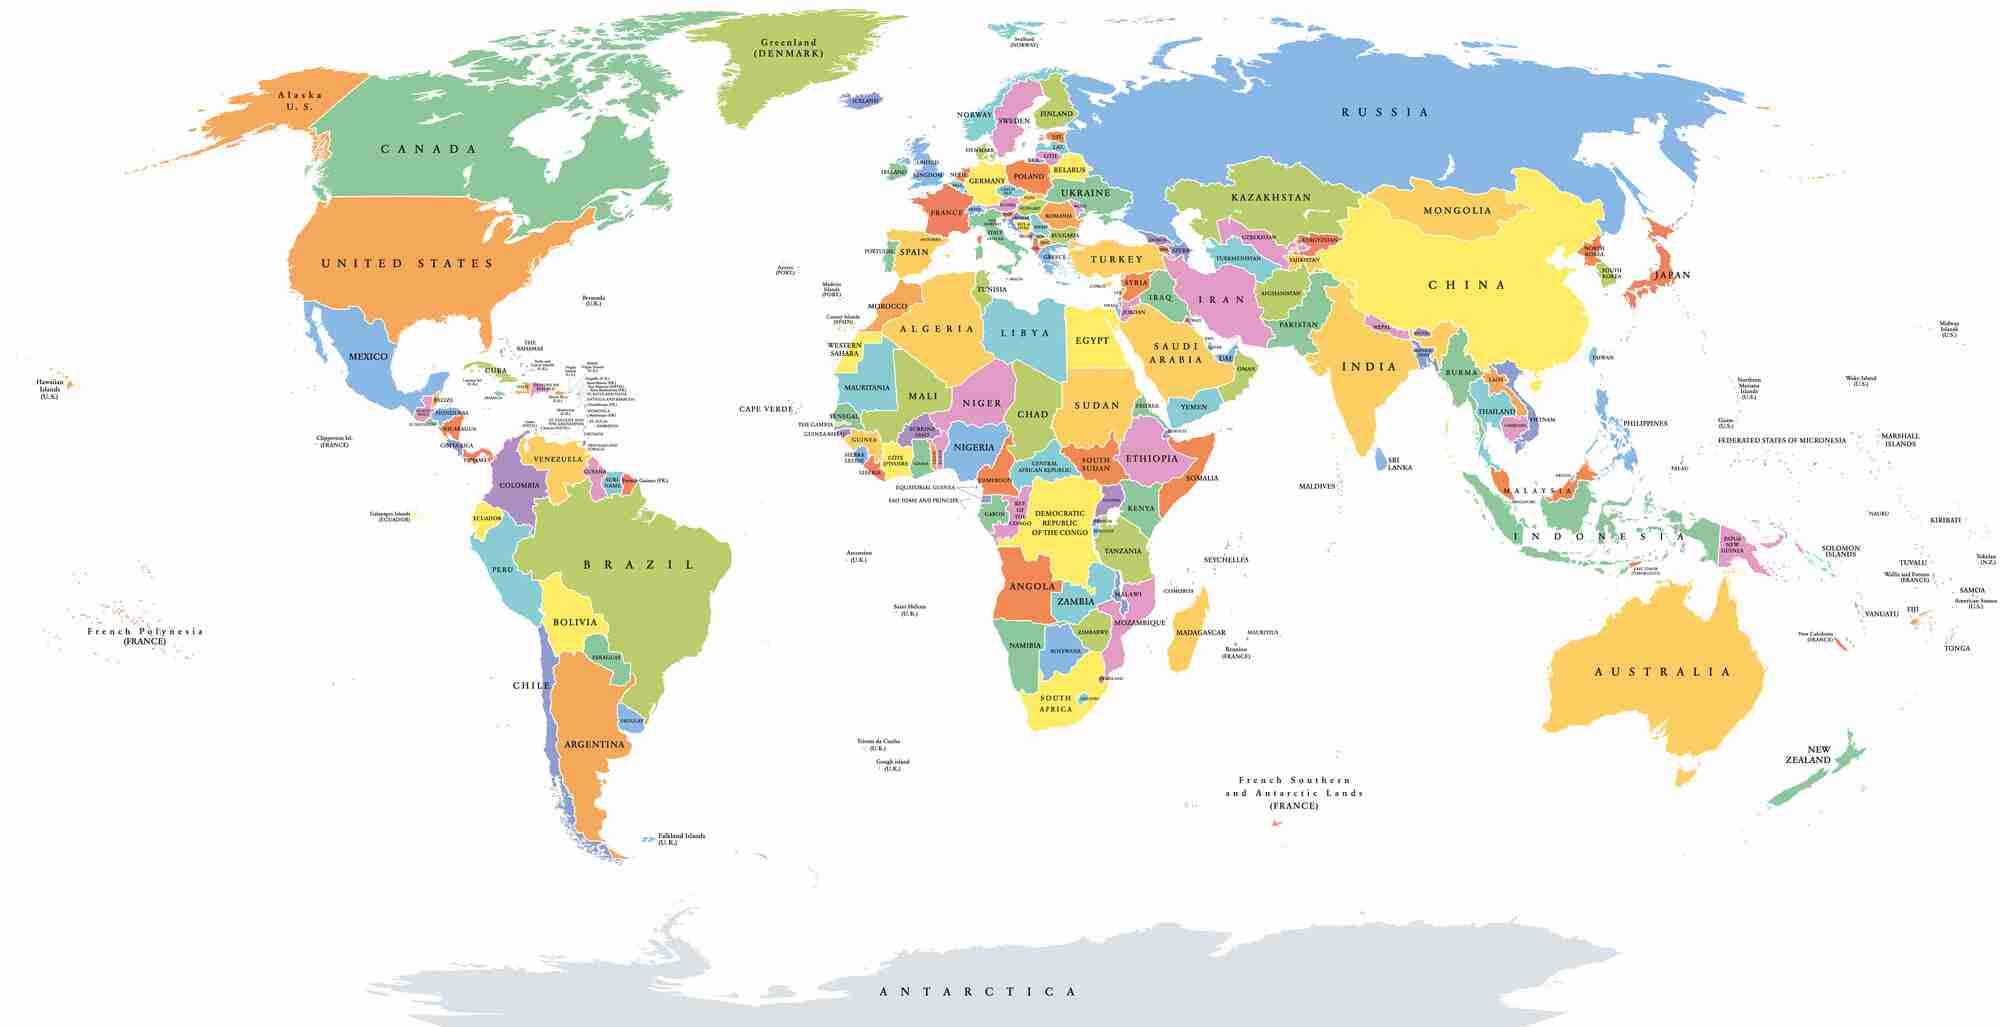 World single states political map